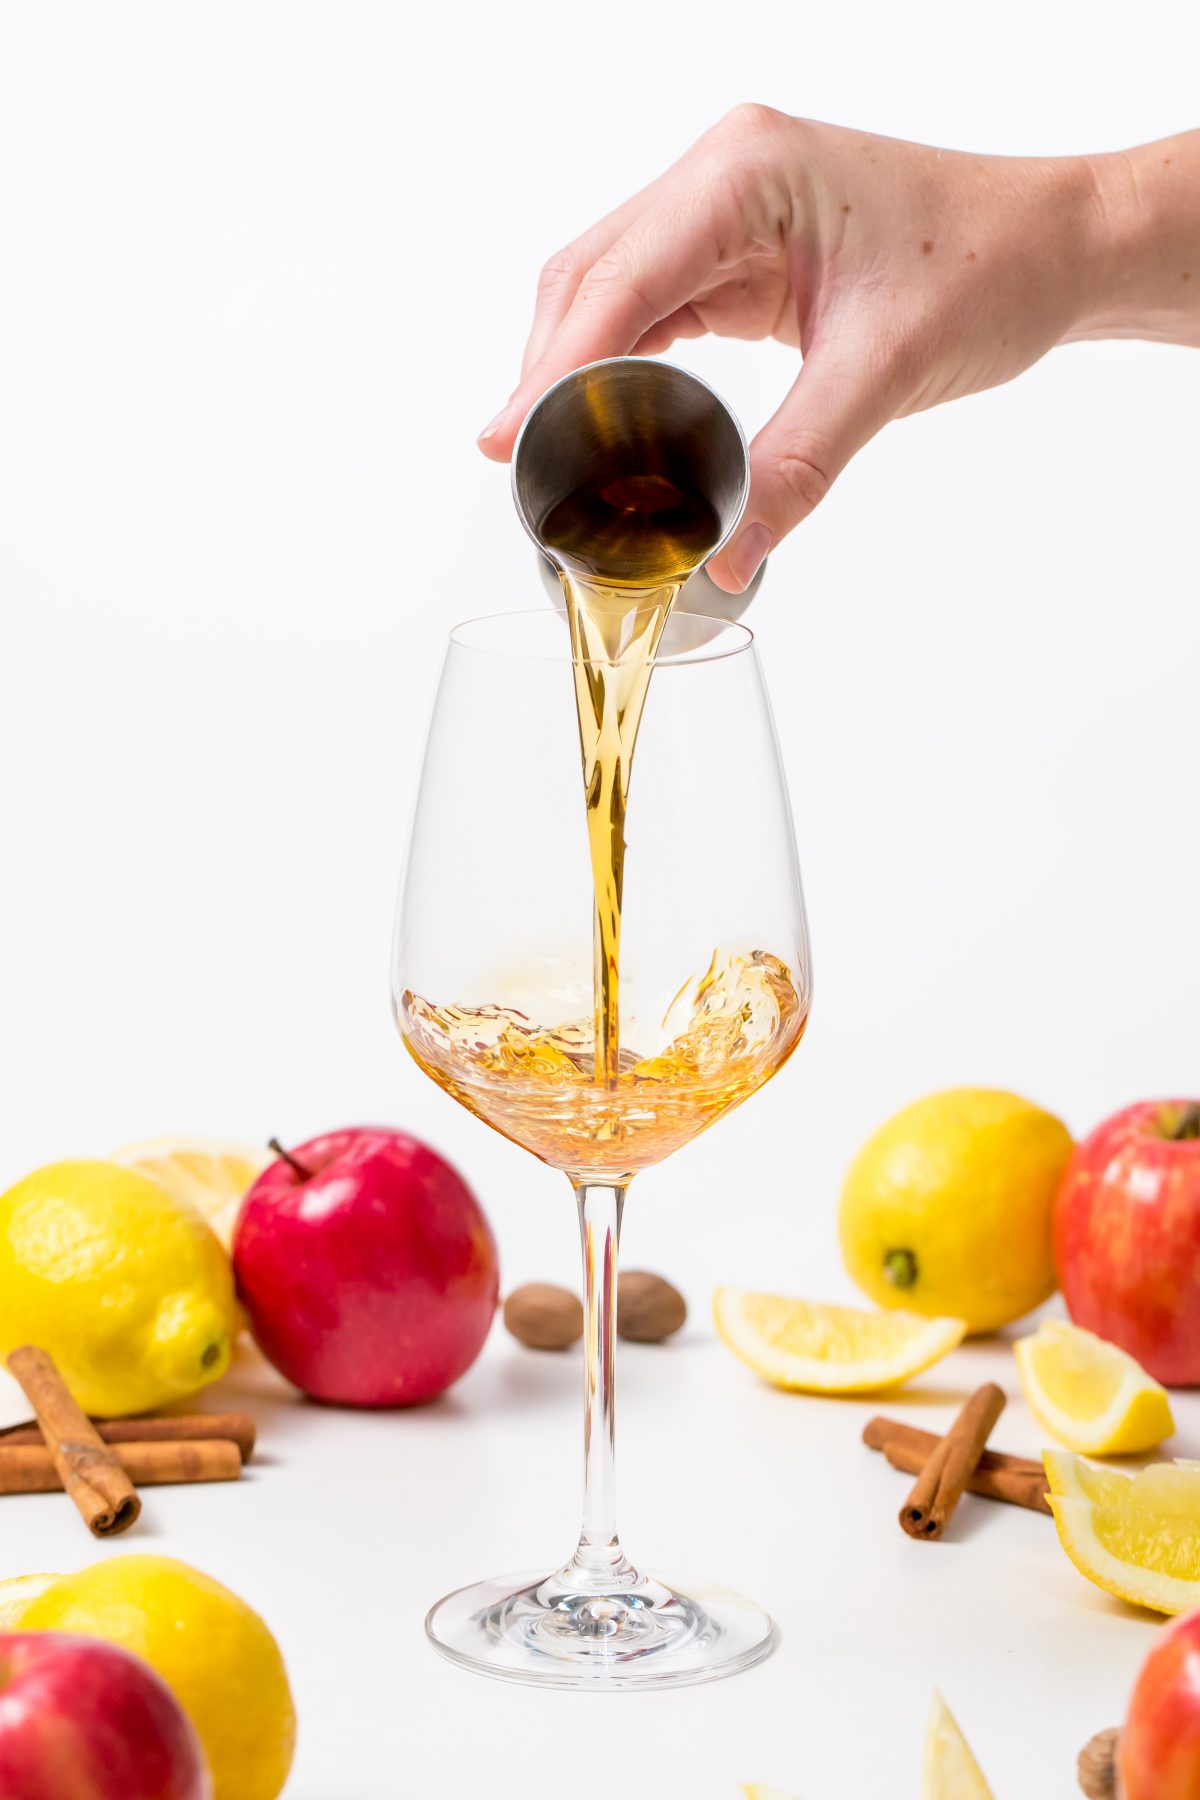 5D4B6970 - Apple Amaretto Sour - Start with the liquor